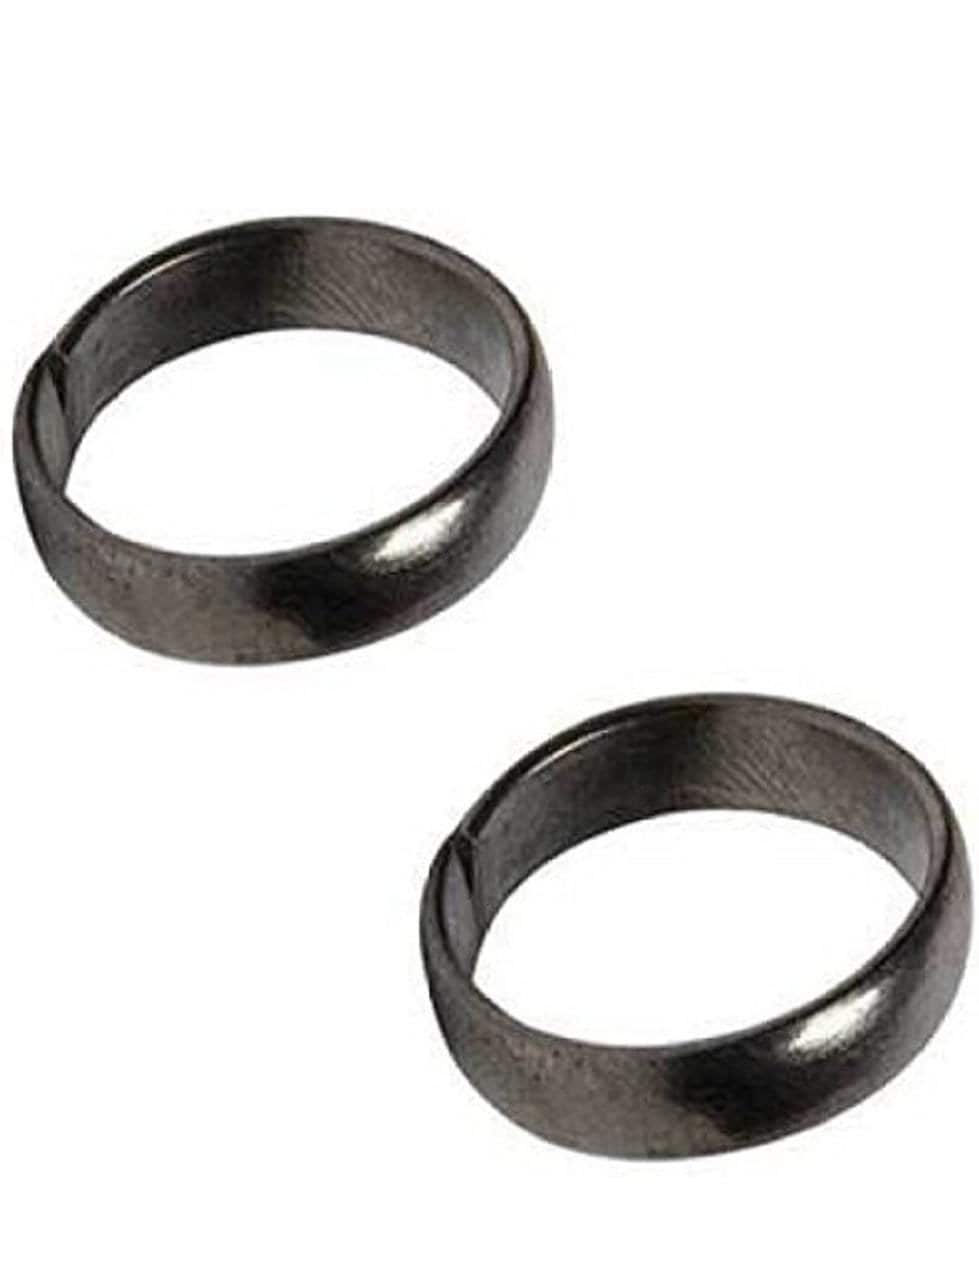 Shani Ka Chhalla, Kale Ghode Ki Naal Ring, Black Horse Shoe Iron Ring –  A1144-03 - SriVanaja Puja Store